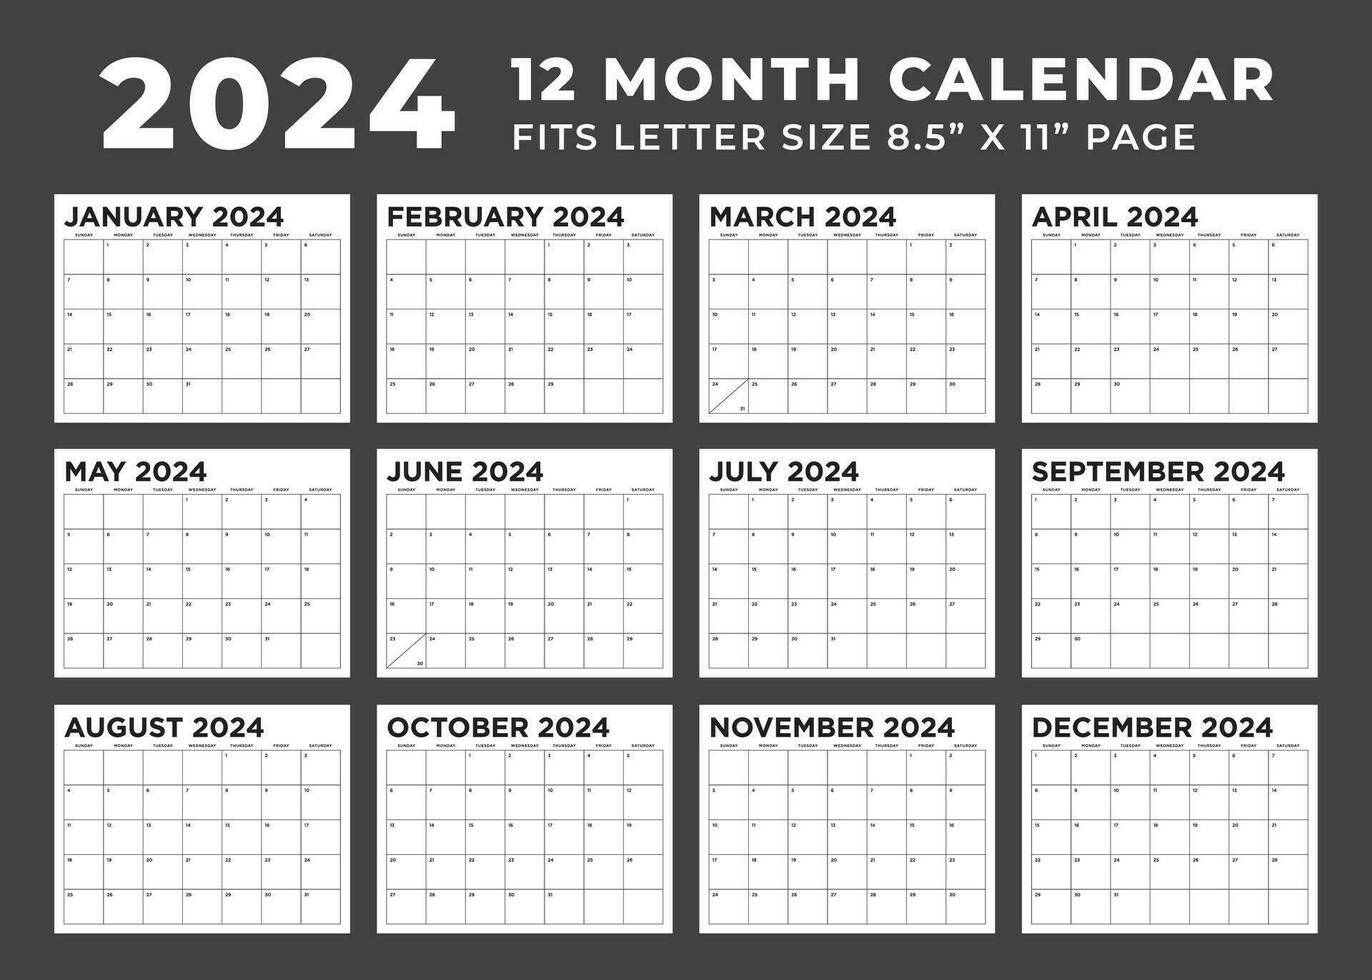 Calendar Template For 2024. Week Starts On Sunday. 12 Month | Printable Calendar 2024 Ltr Size